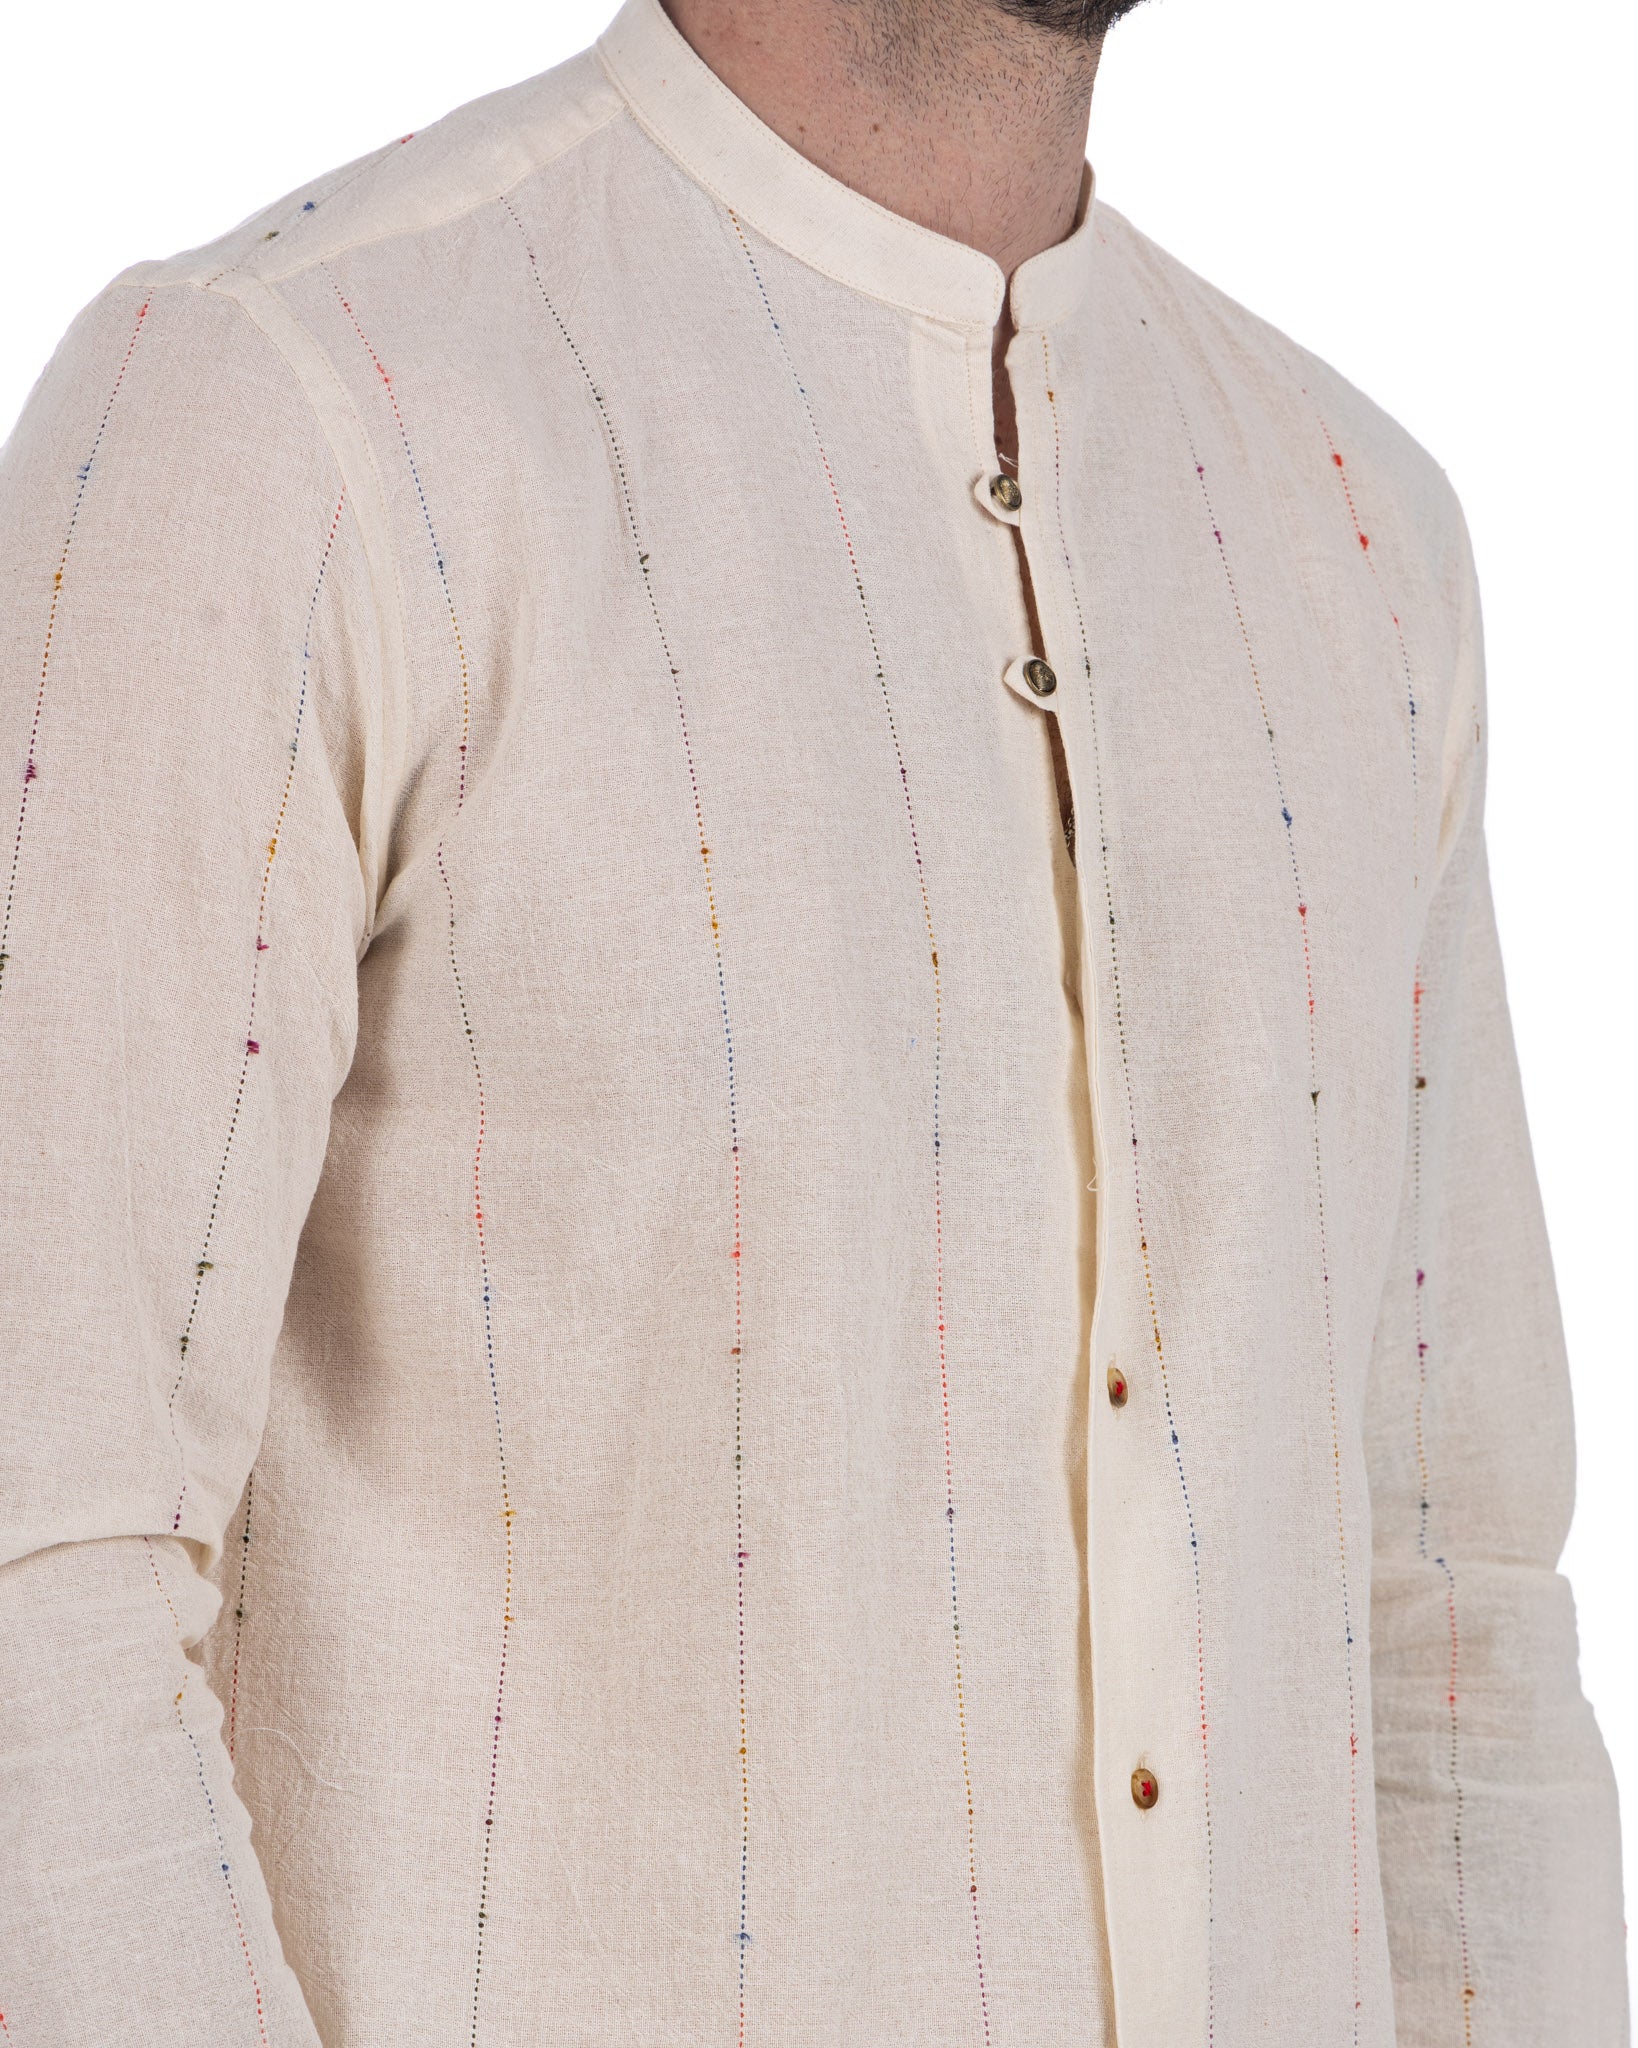 Iride - Korean shirt with beige relief stripes